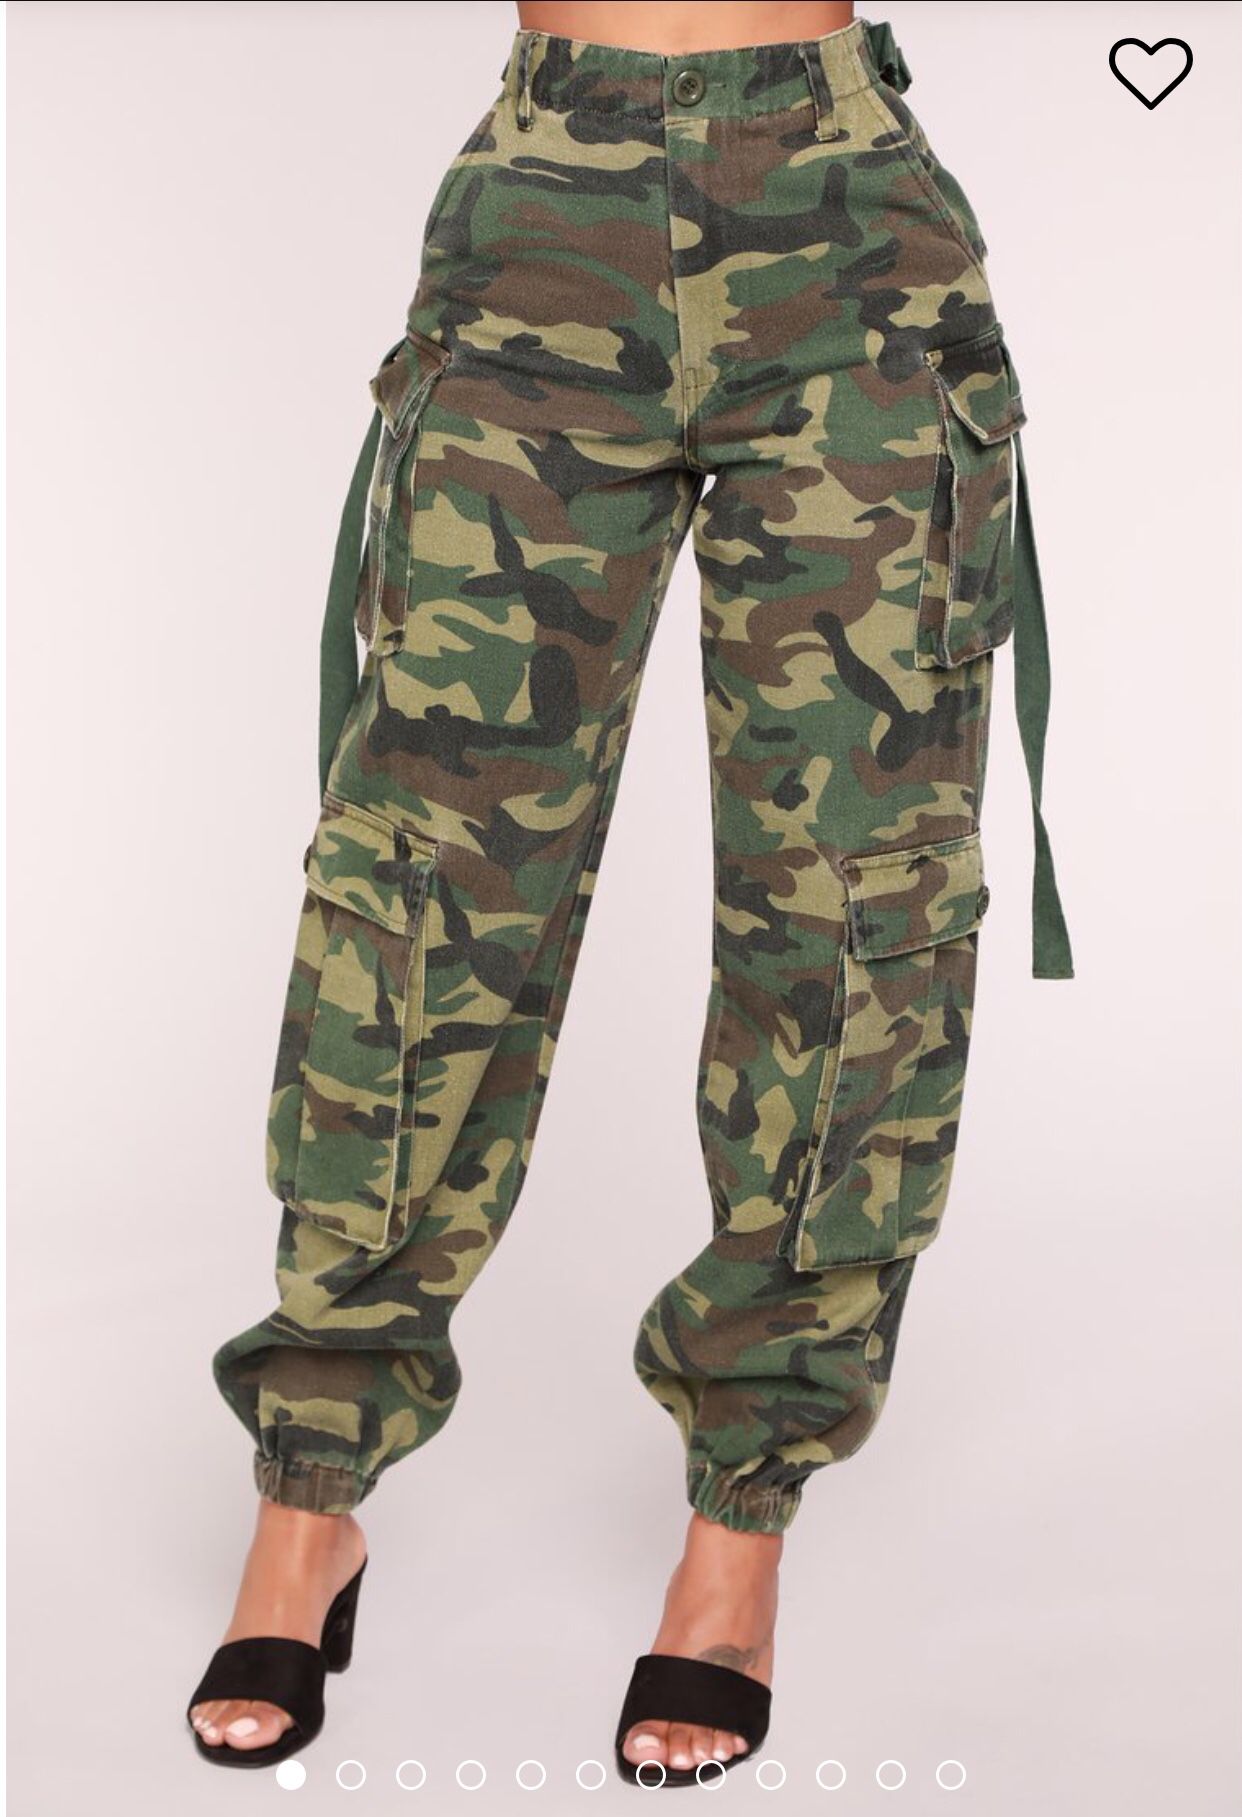 Ladies Fashion nova Cargo pants with tags brand new. Medium size